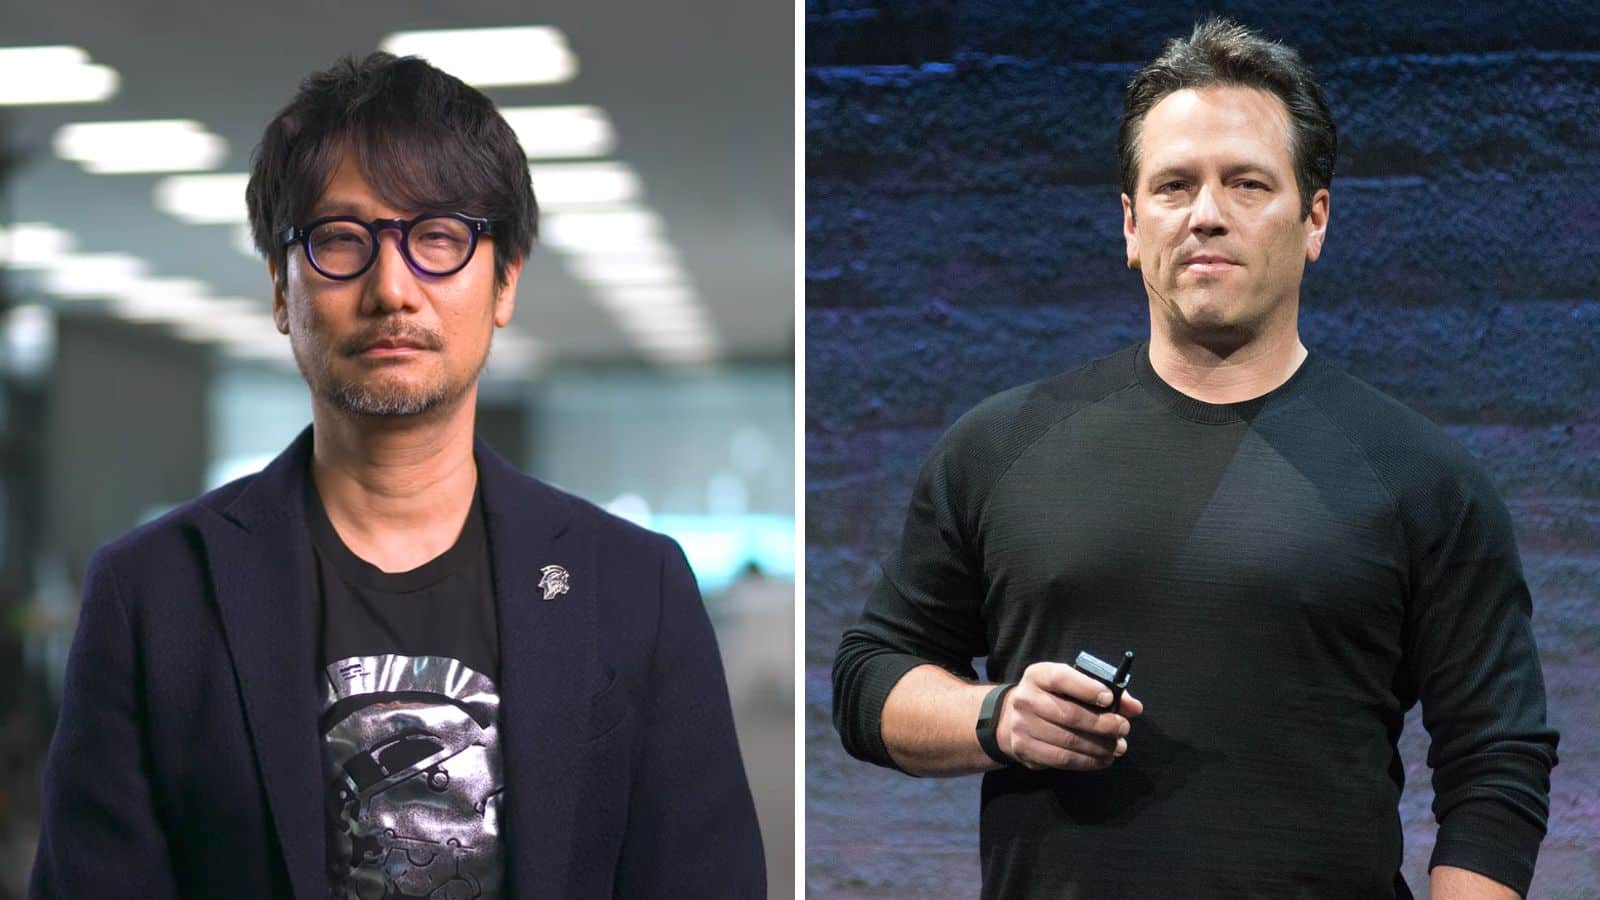 Kojima Productions & Xbox Game Studios partnership revealed - Dexerto